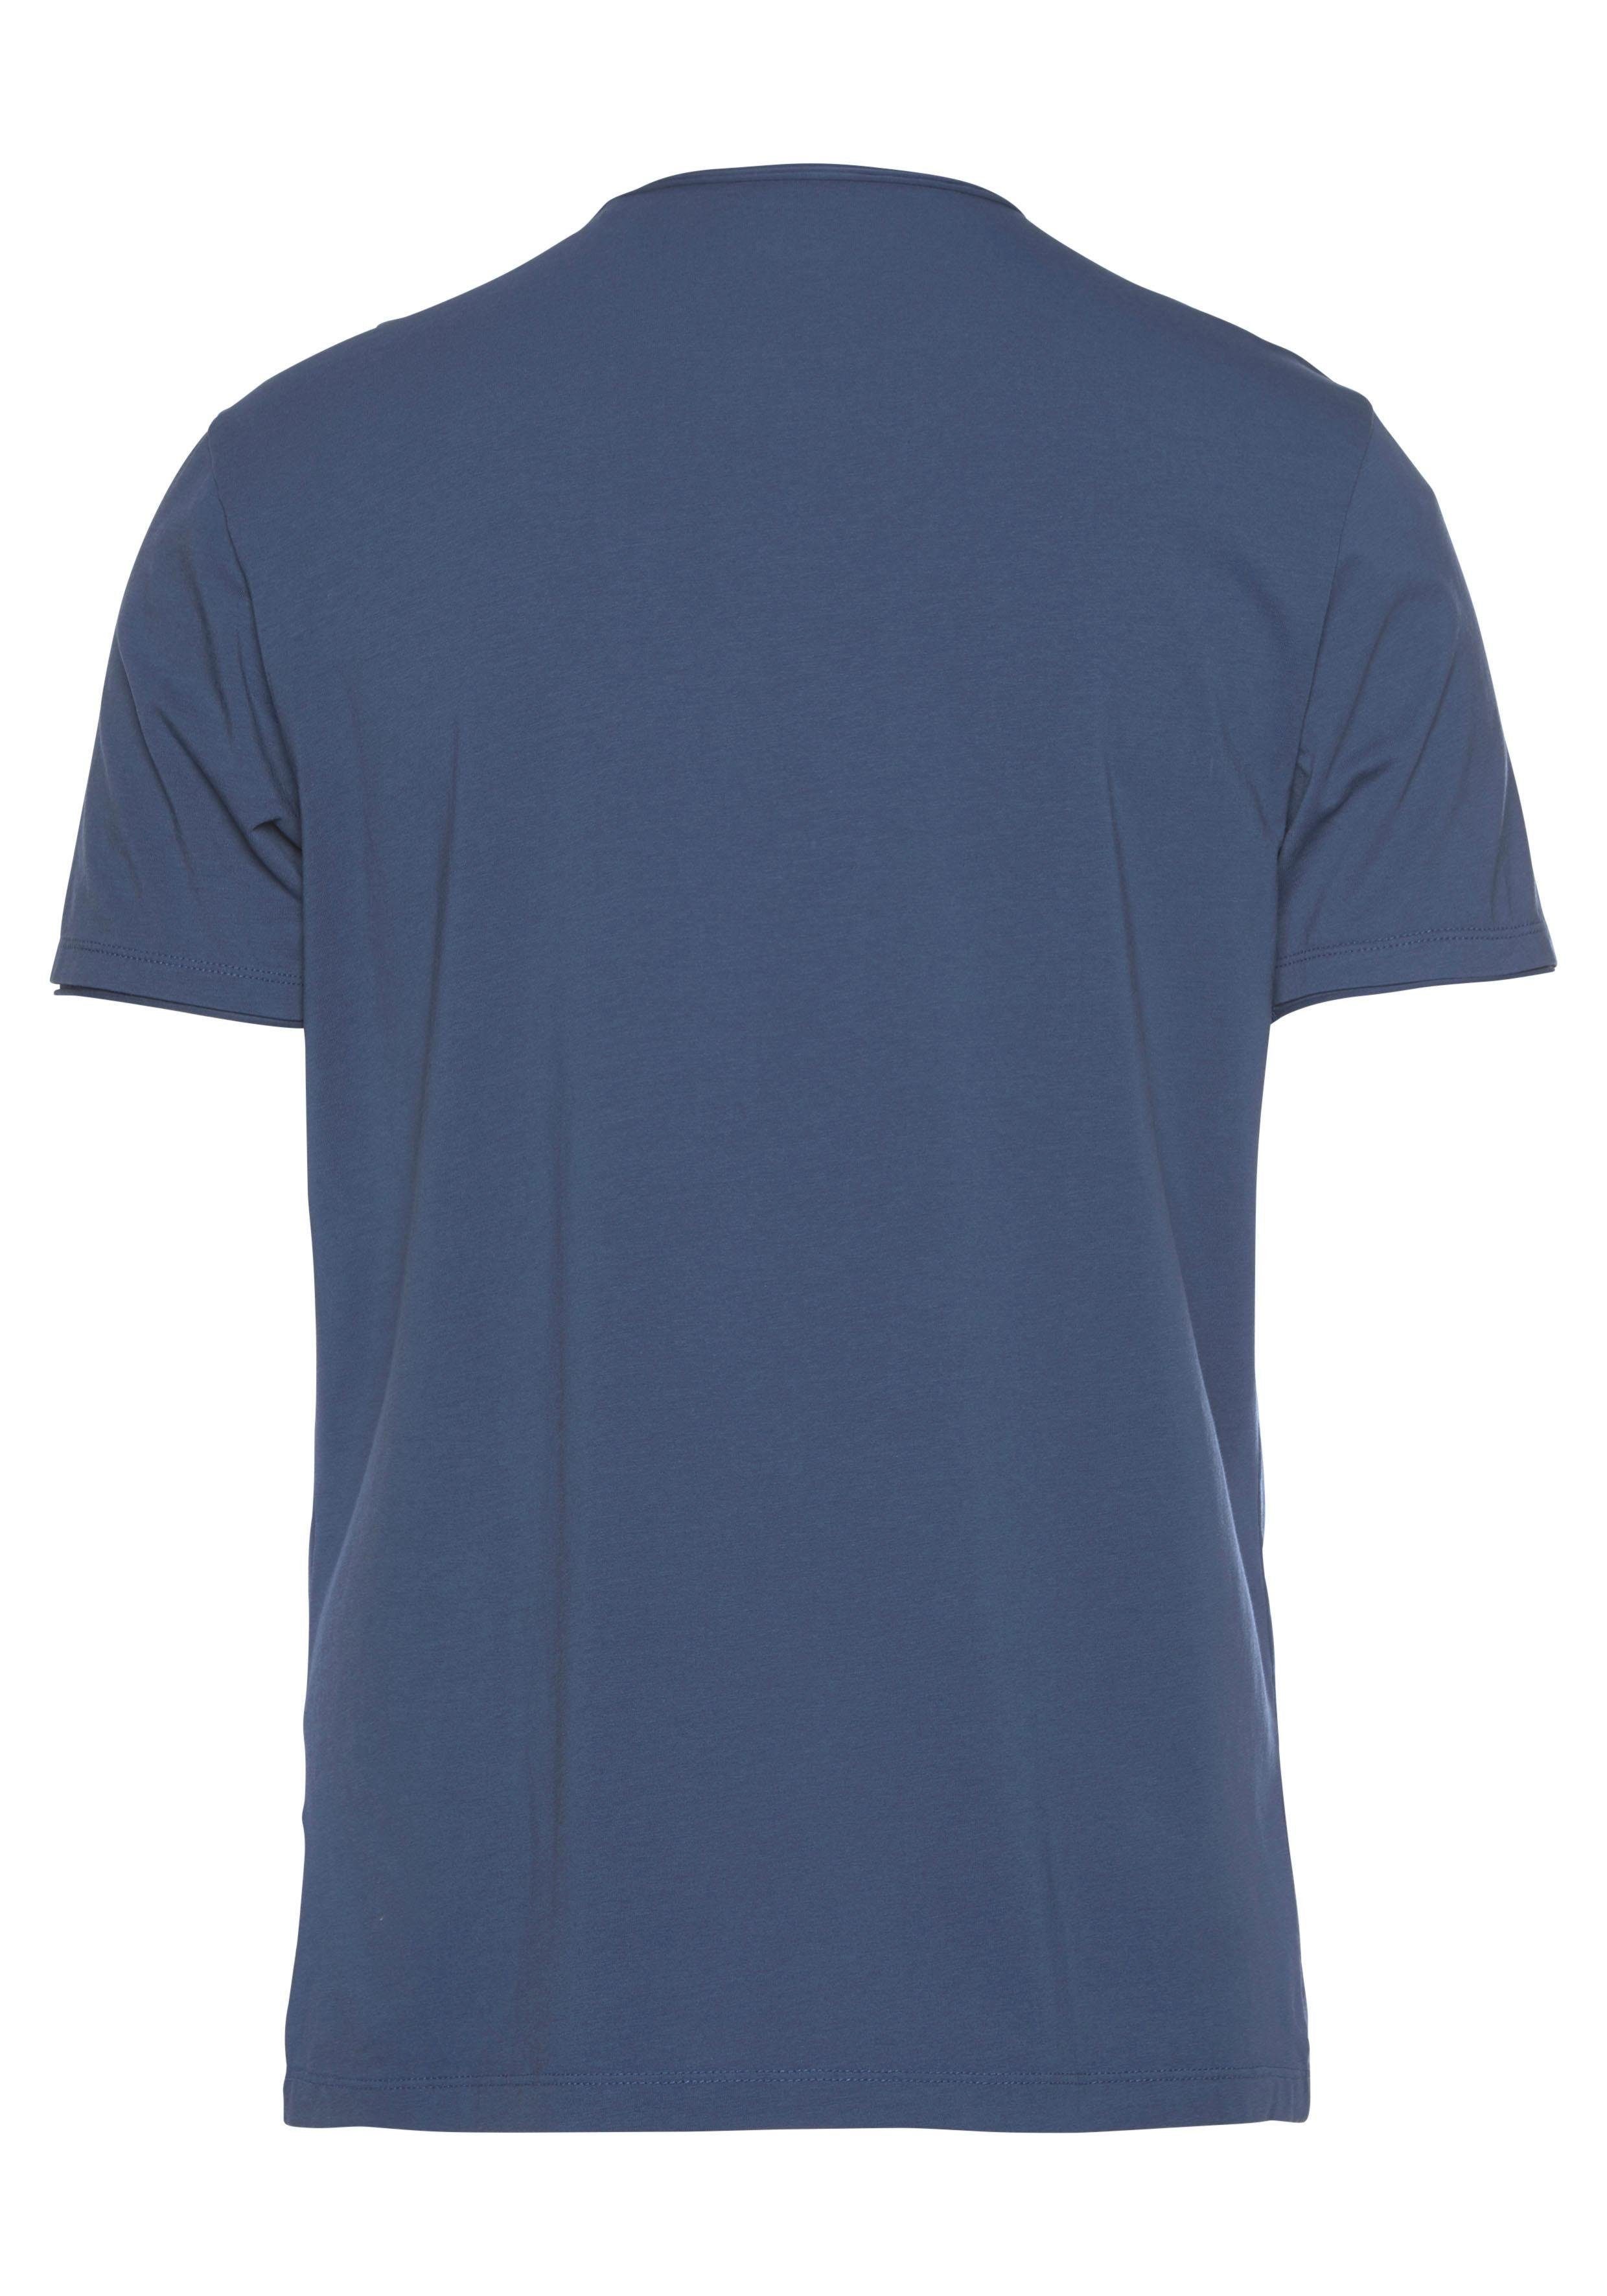 OLYMP T-Shirt Level Five Jersey indigo fit feinem aus body